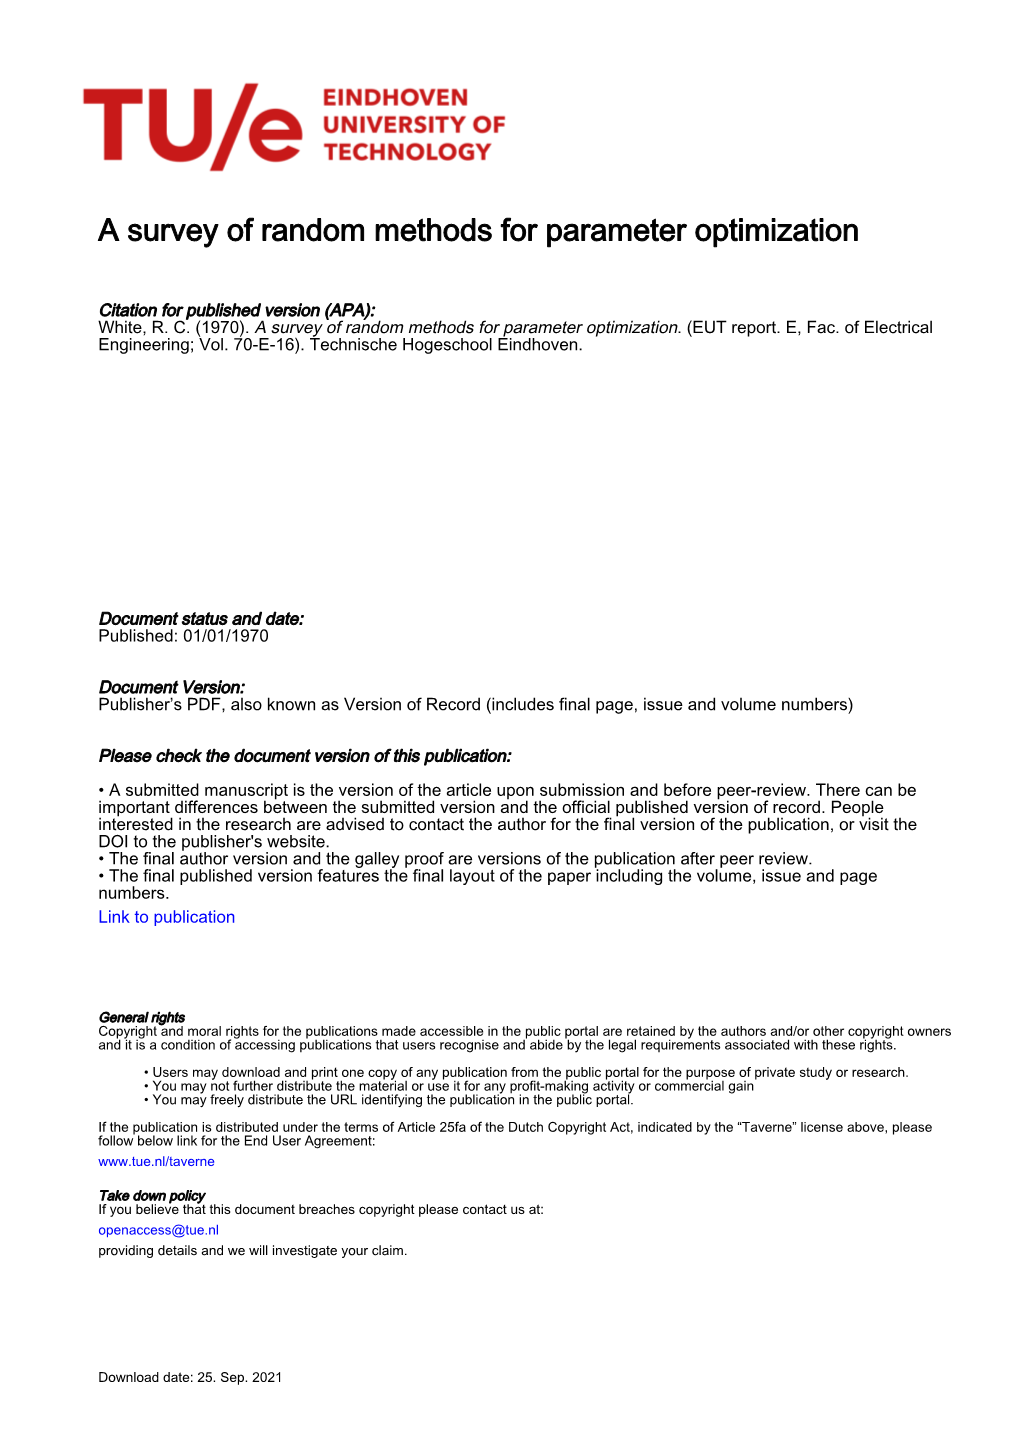 A Survey of Random Methods for Parameter Optimization